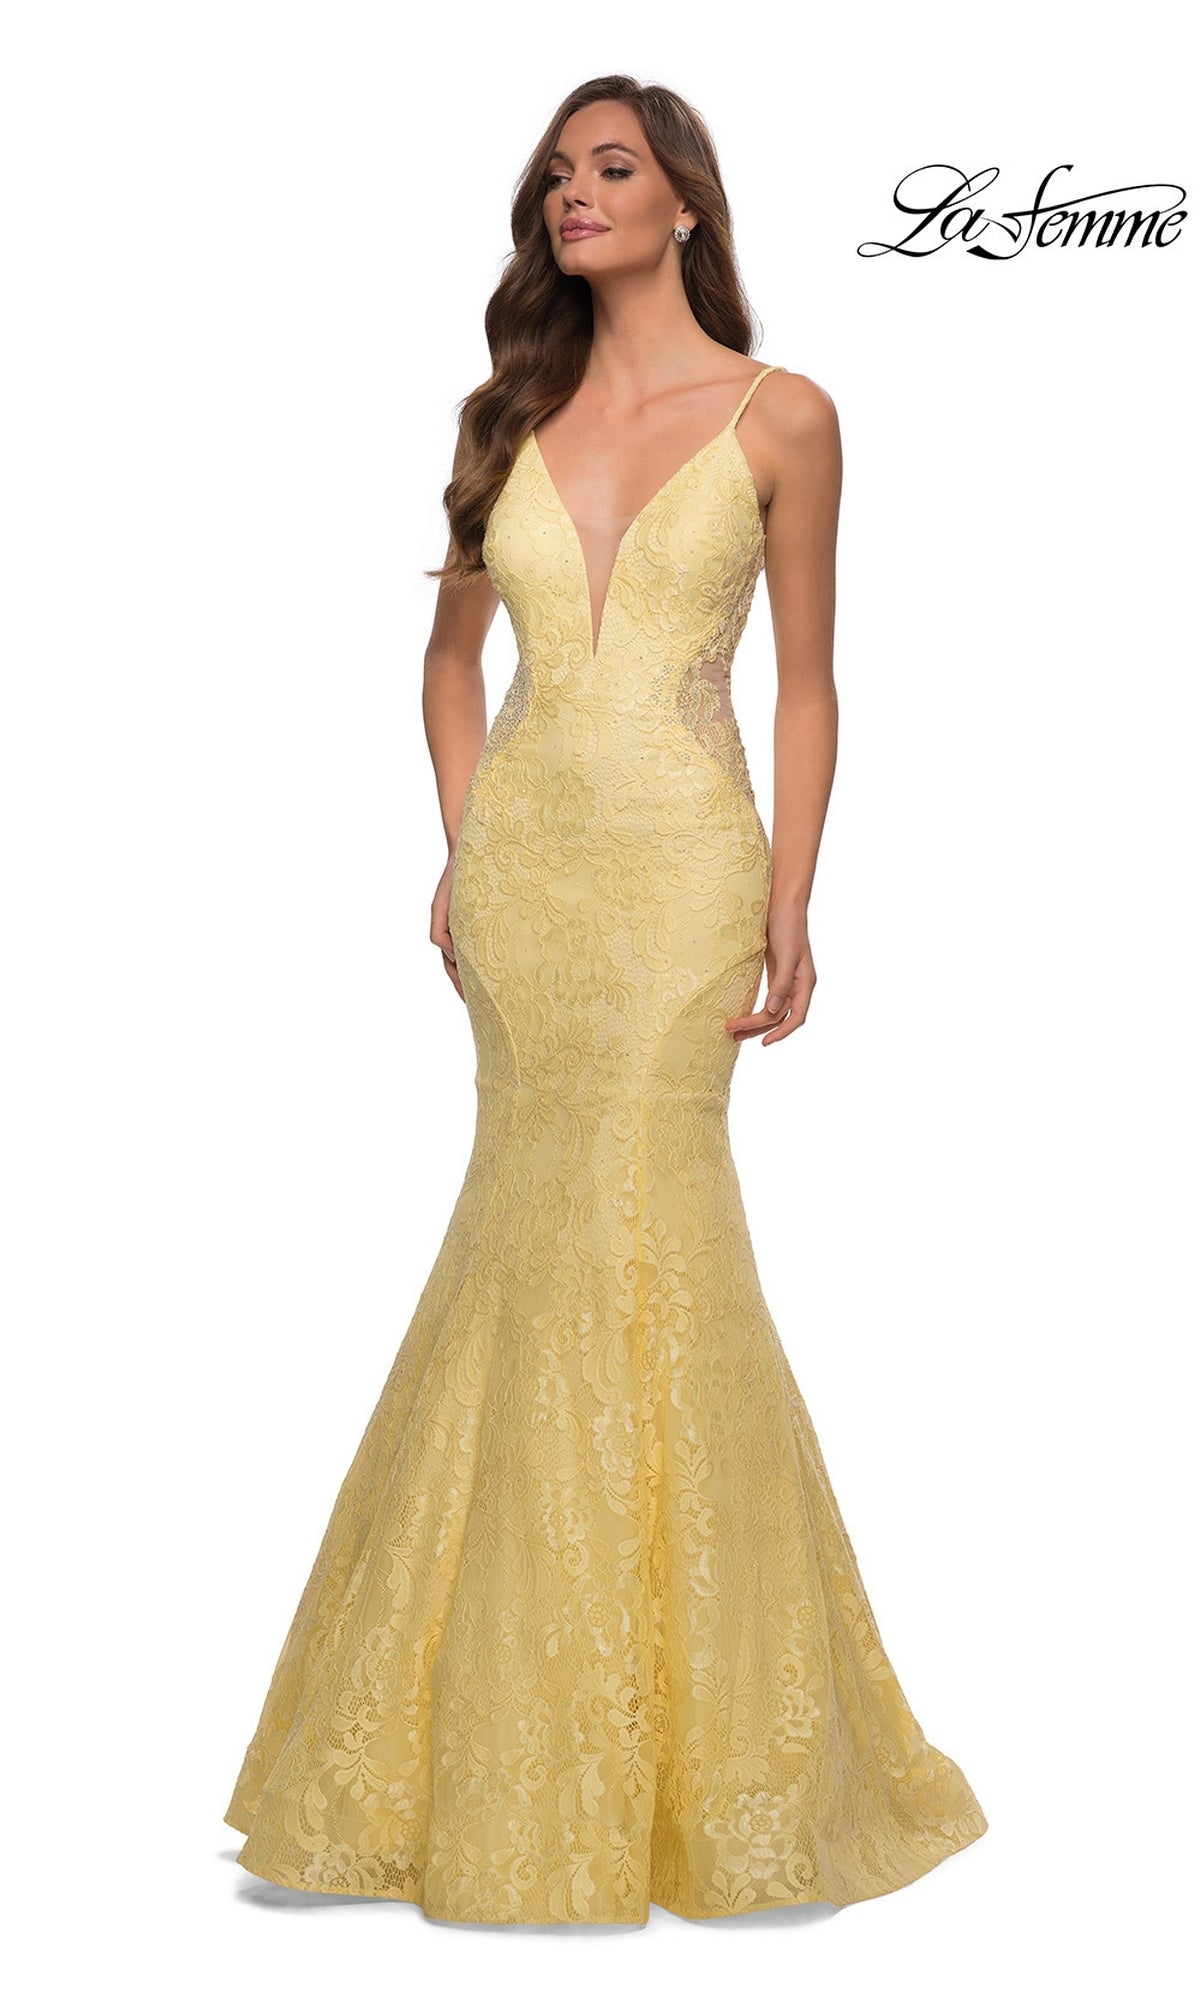  La Femme 28355 Formal Prom Dress